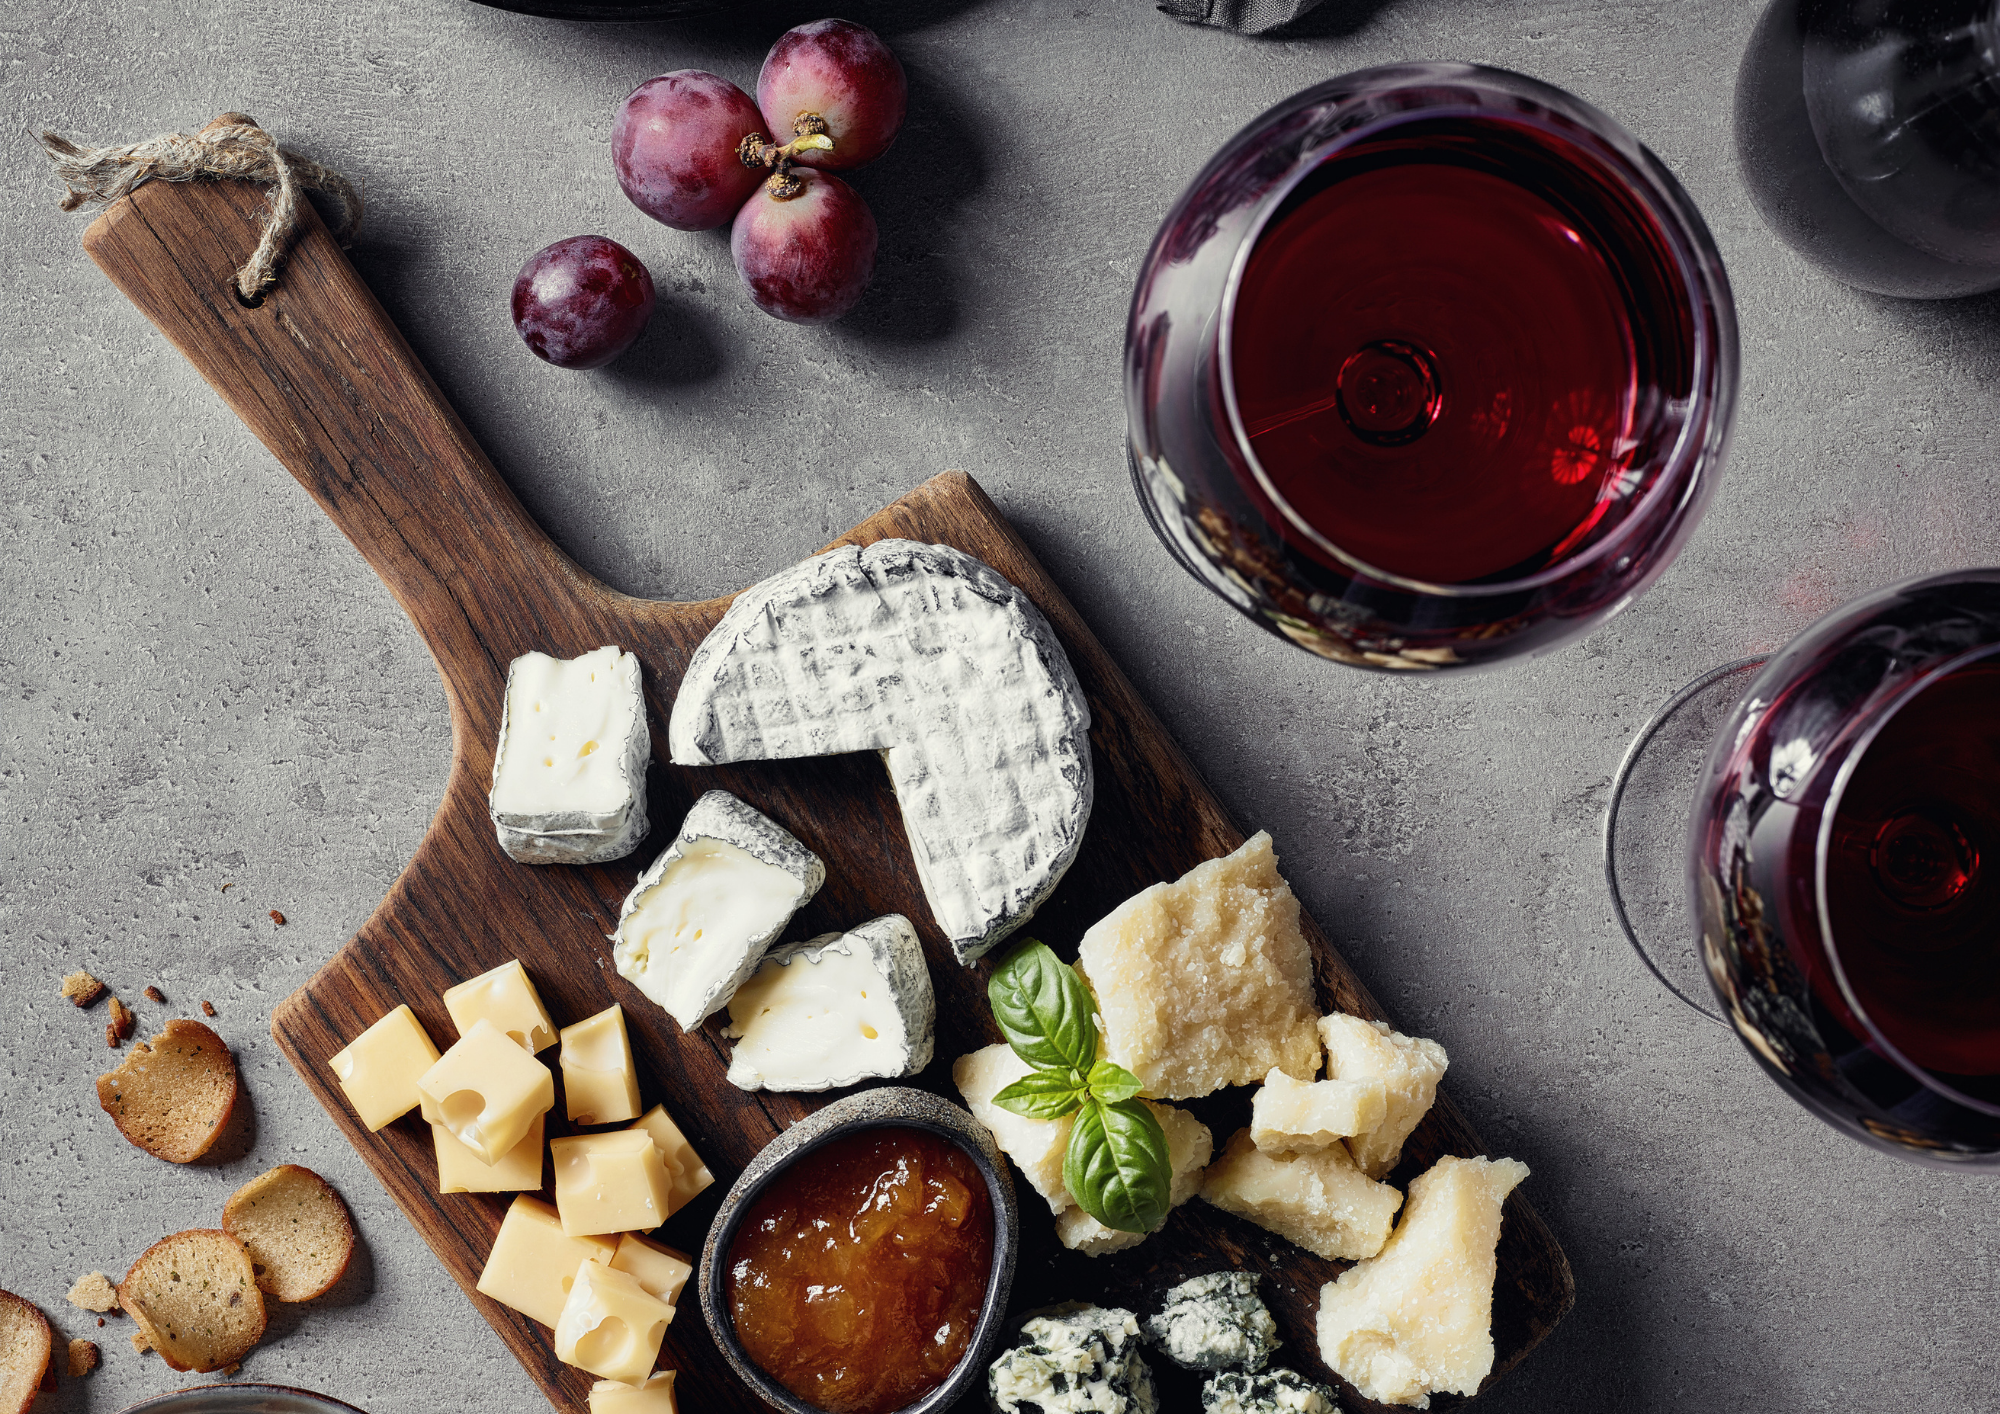 Wijn en kaas | bergovino.nl – BergoVino online wijn adviseur''